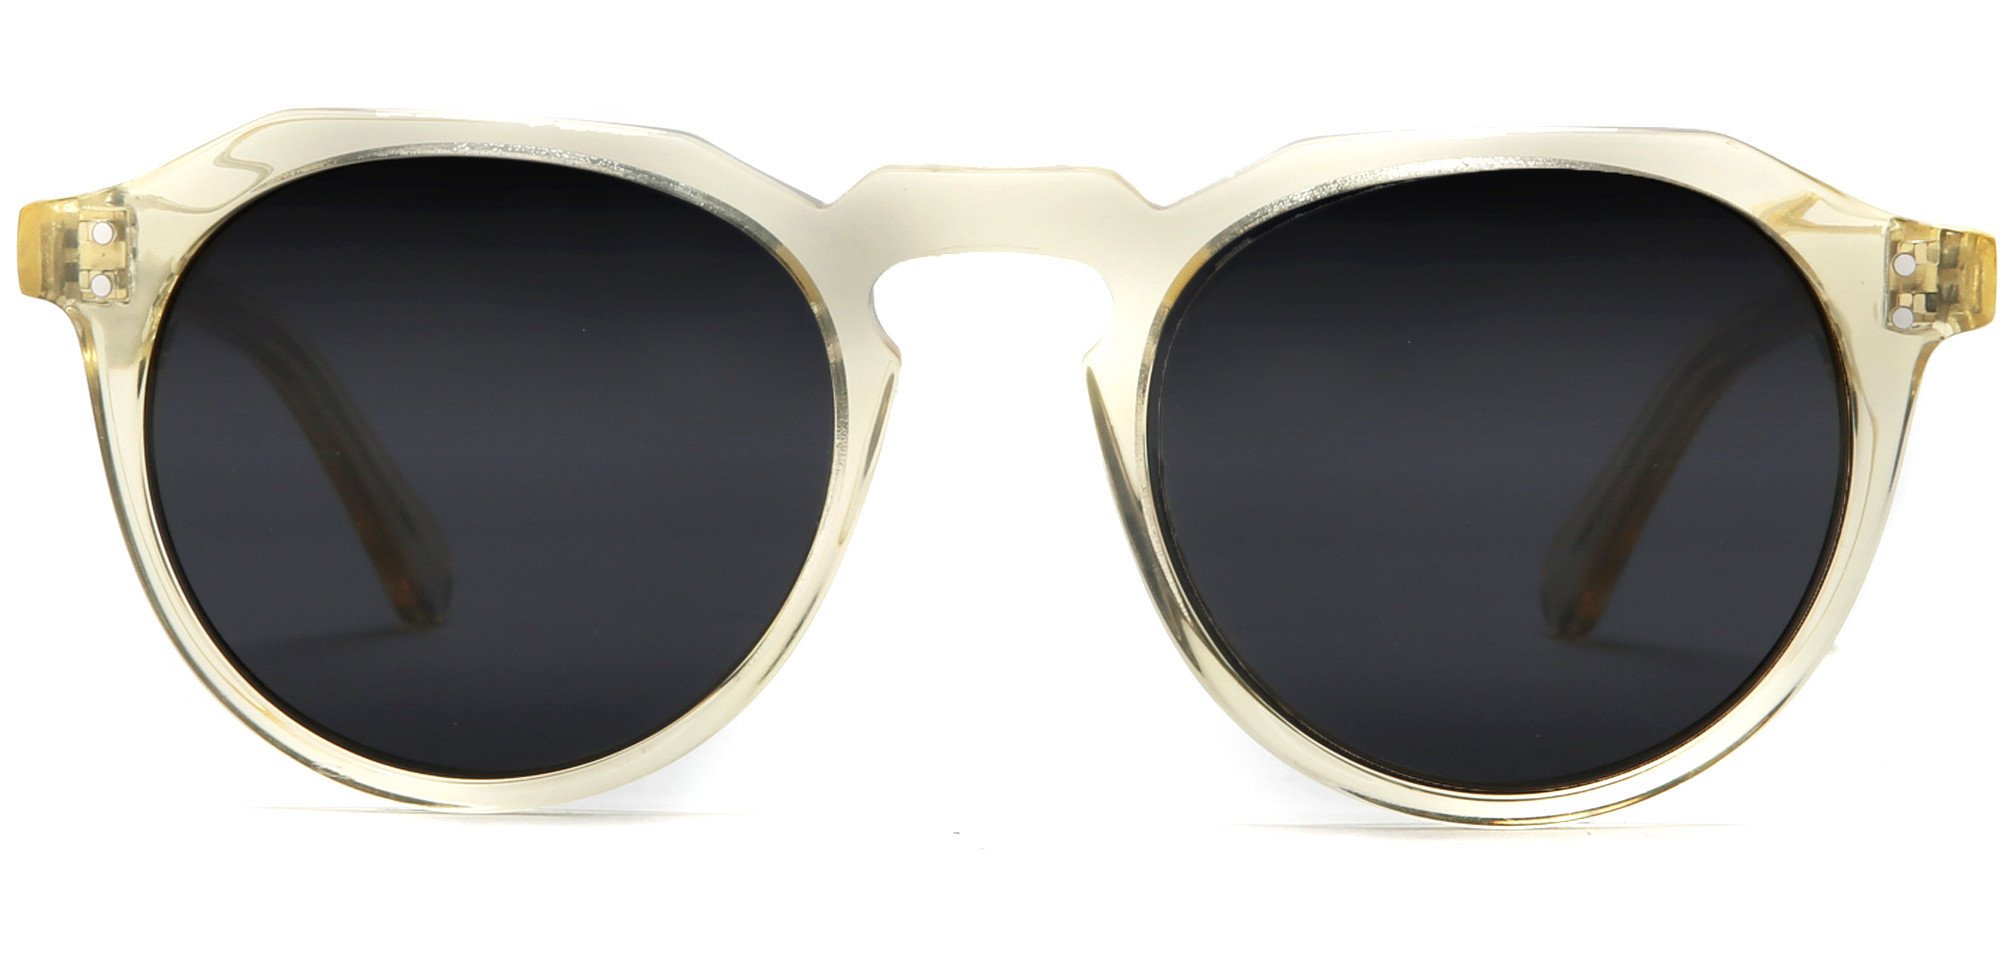 Samba Shades Polarized Lauren Backal Cordoba Fashion Sunglasses with ...